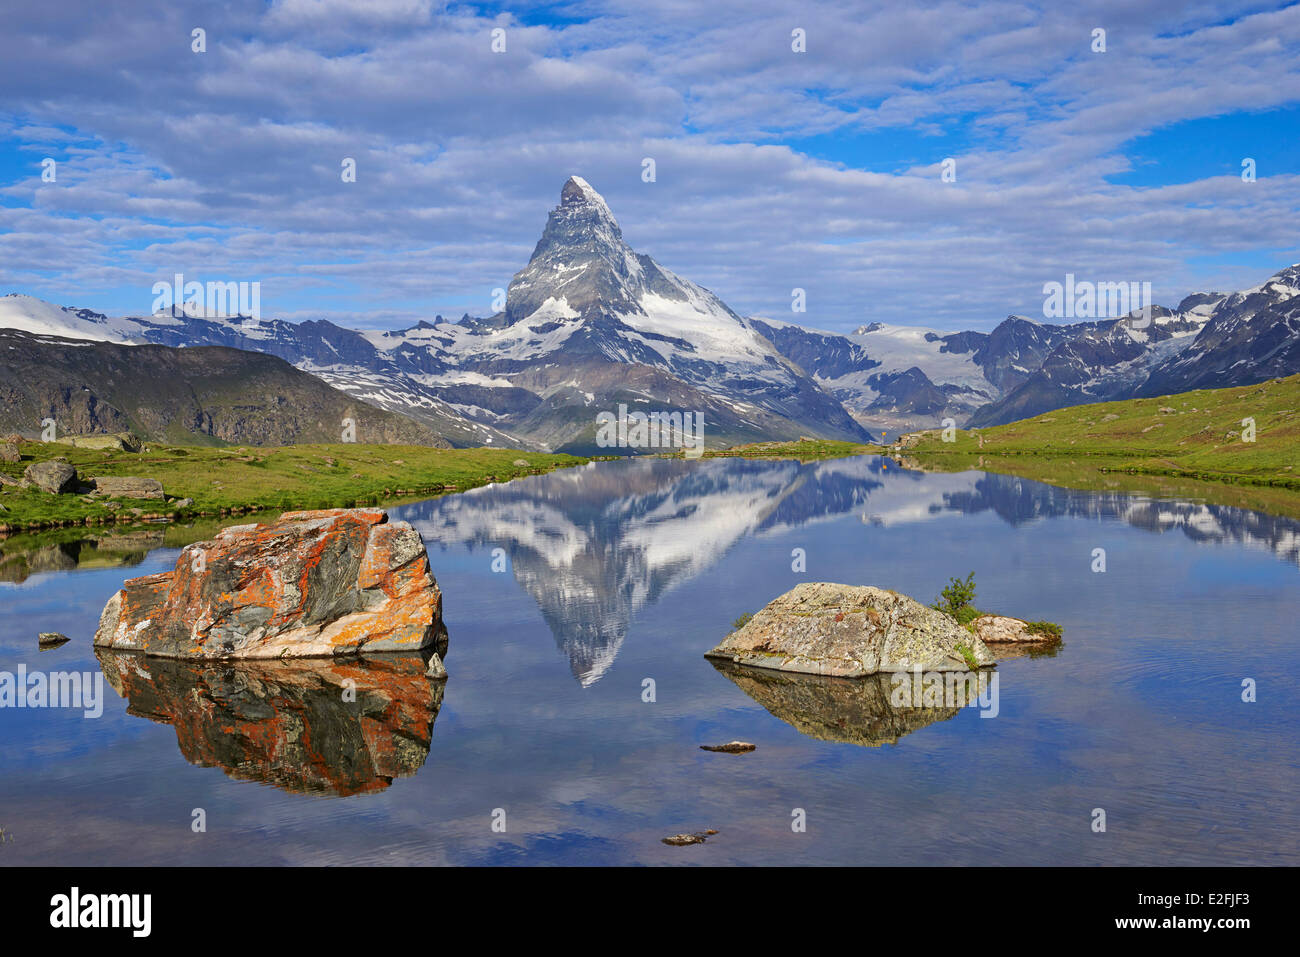 Switzerland, Canton of Valais, Zermatt, Matterhorn (4478m) from Stellisee lake Stock Photo